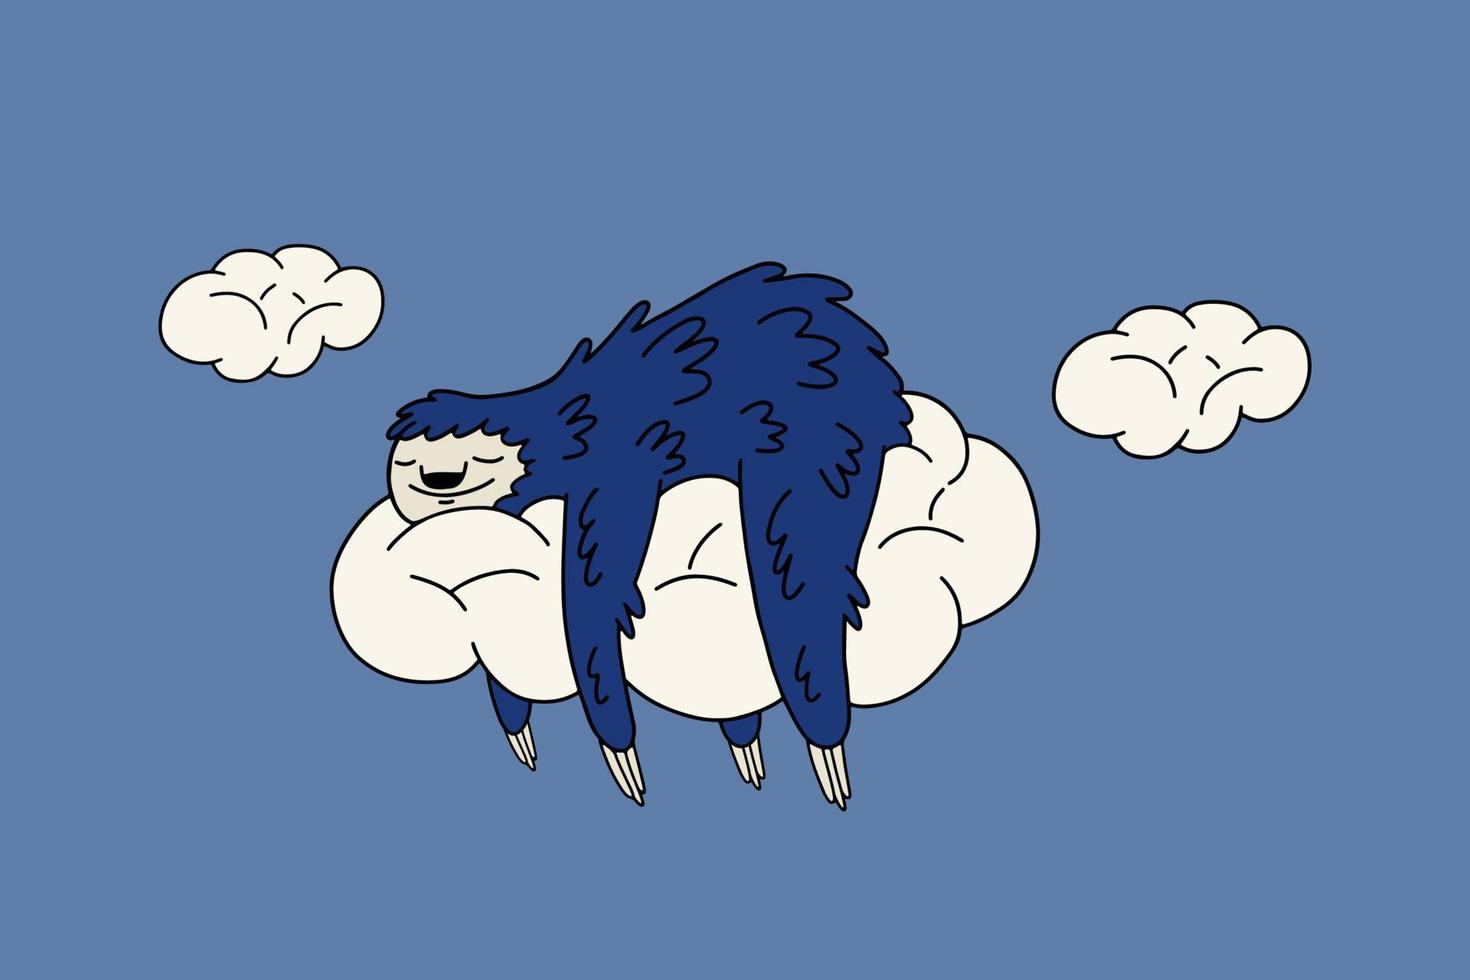 Cute cartoon sloth sleeping on a white cloud in the blue sky. Vector illustration.